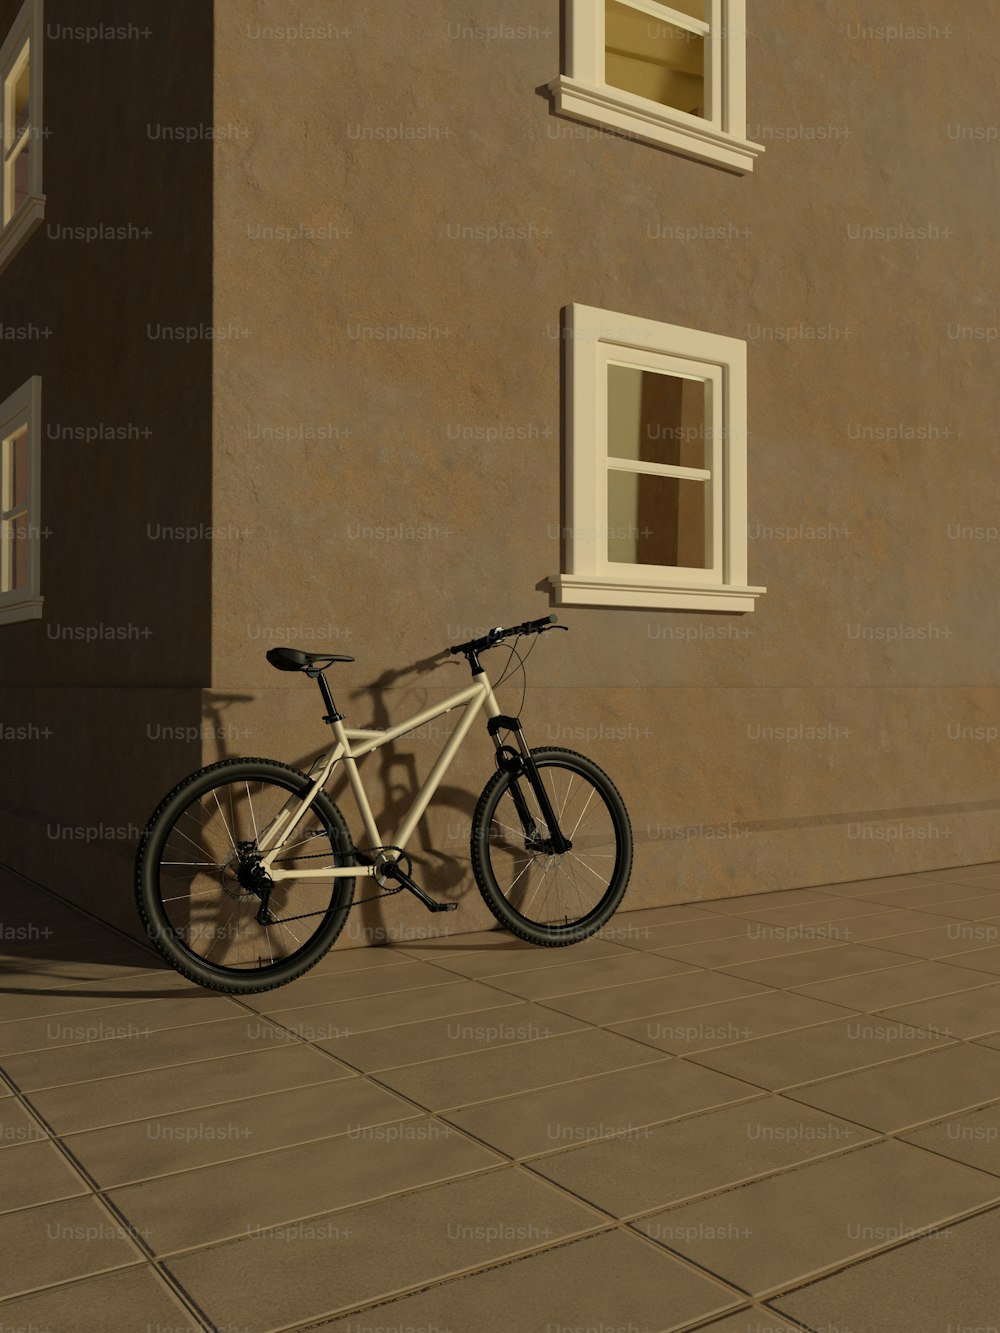 a bike leaning against a building on a sidewalk